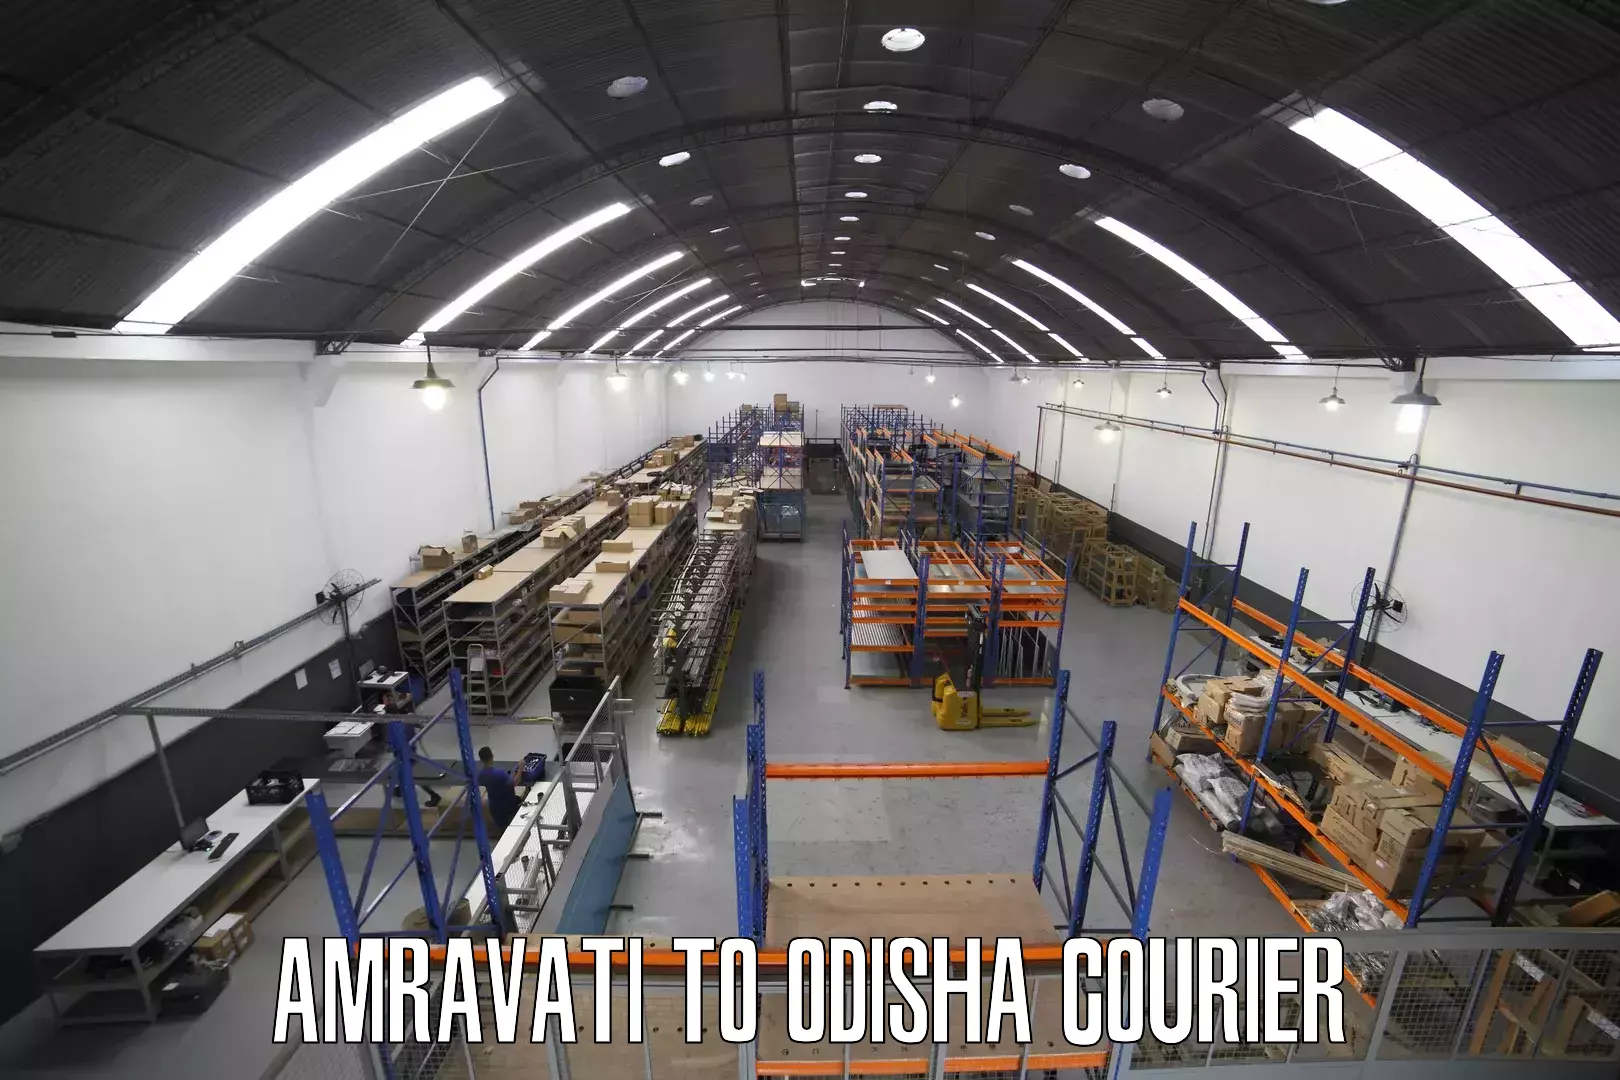 Courier service comparison Amravati to Odisha